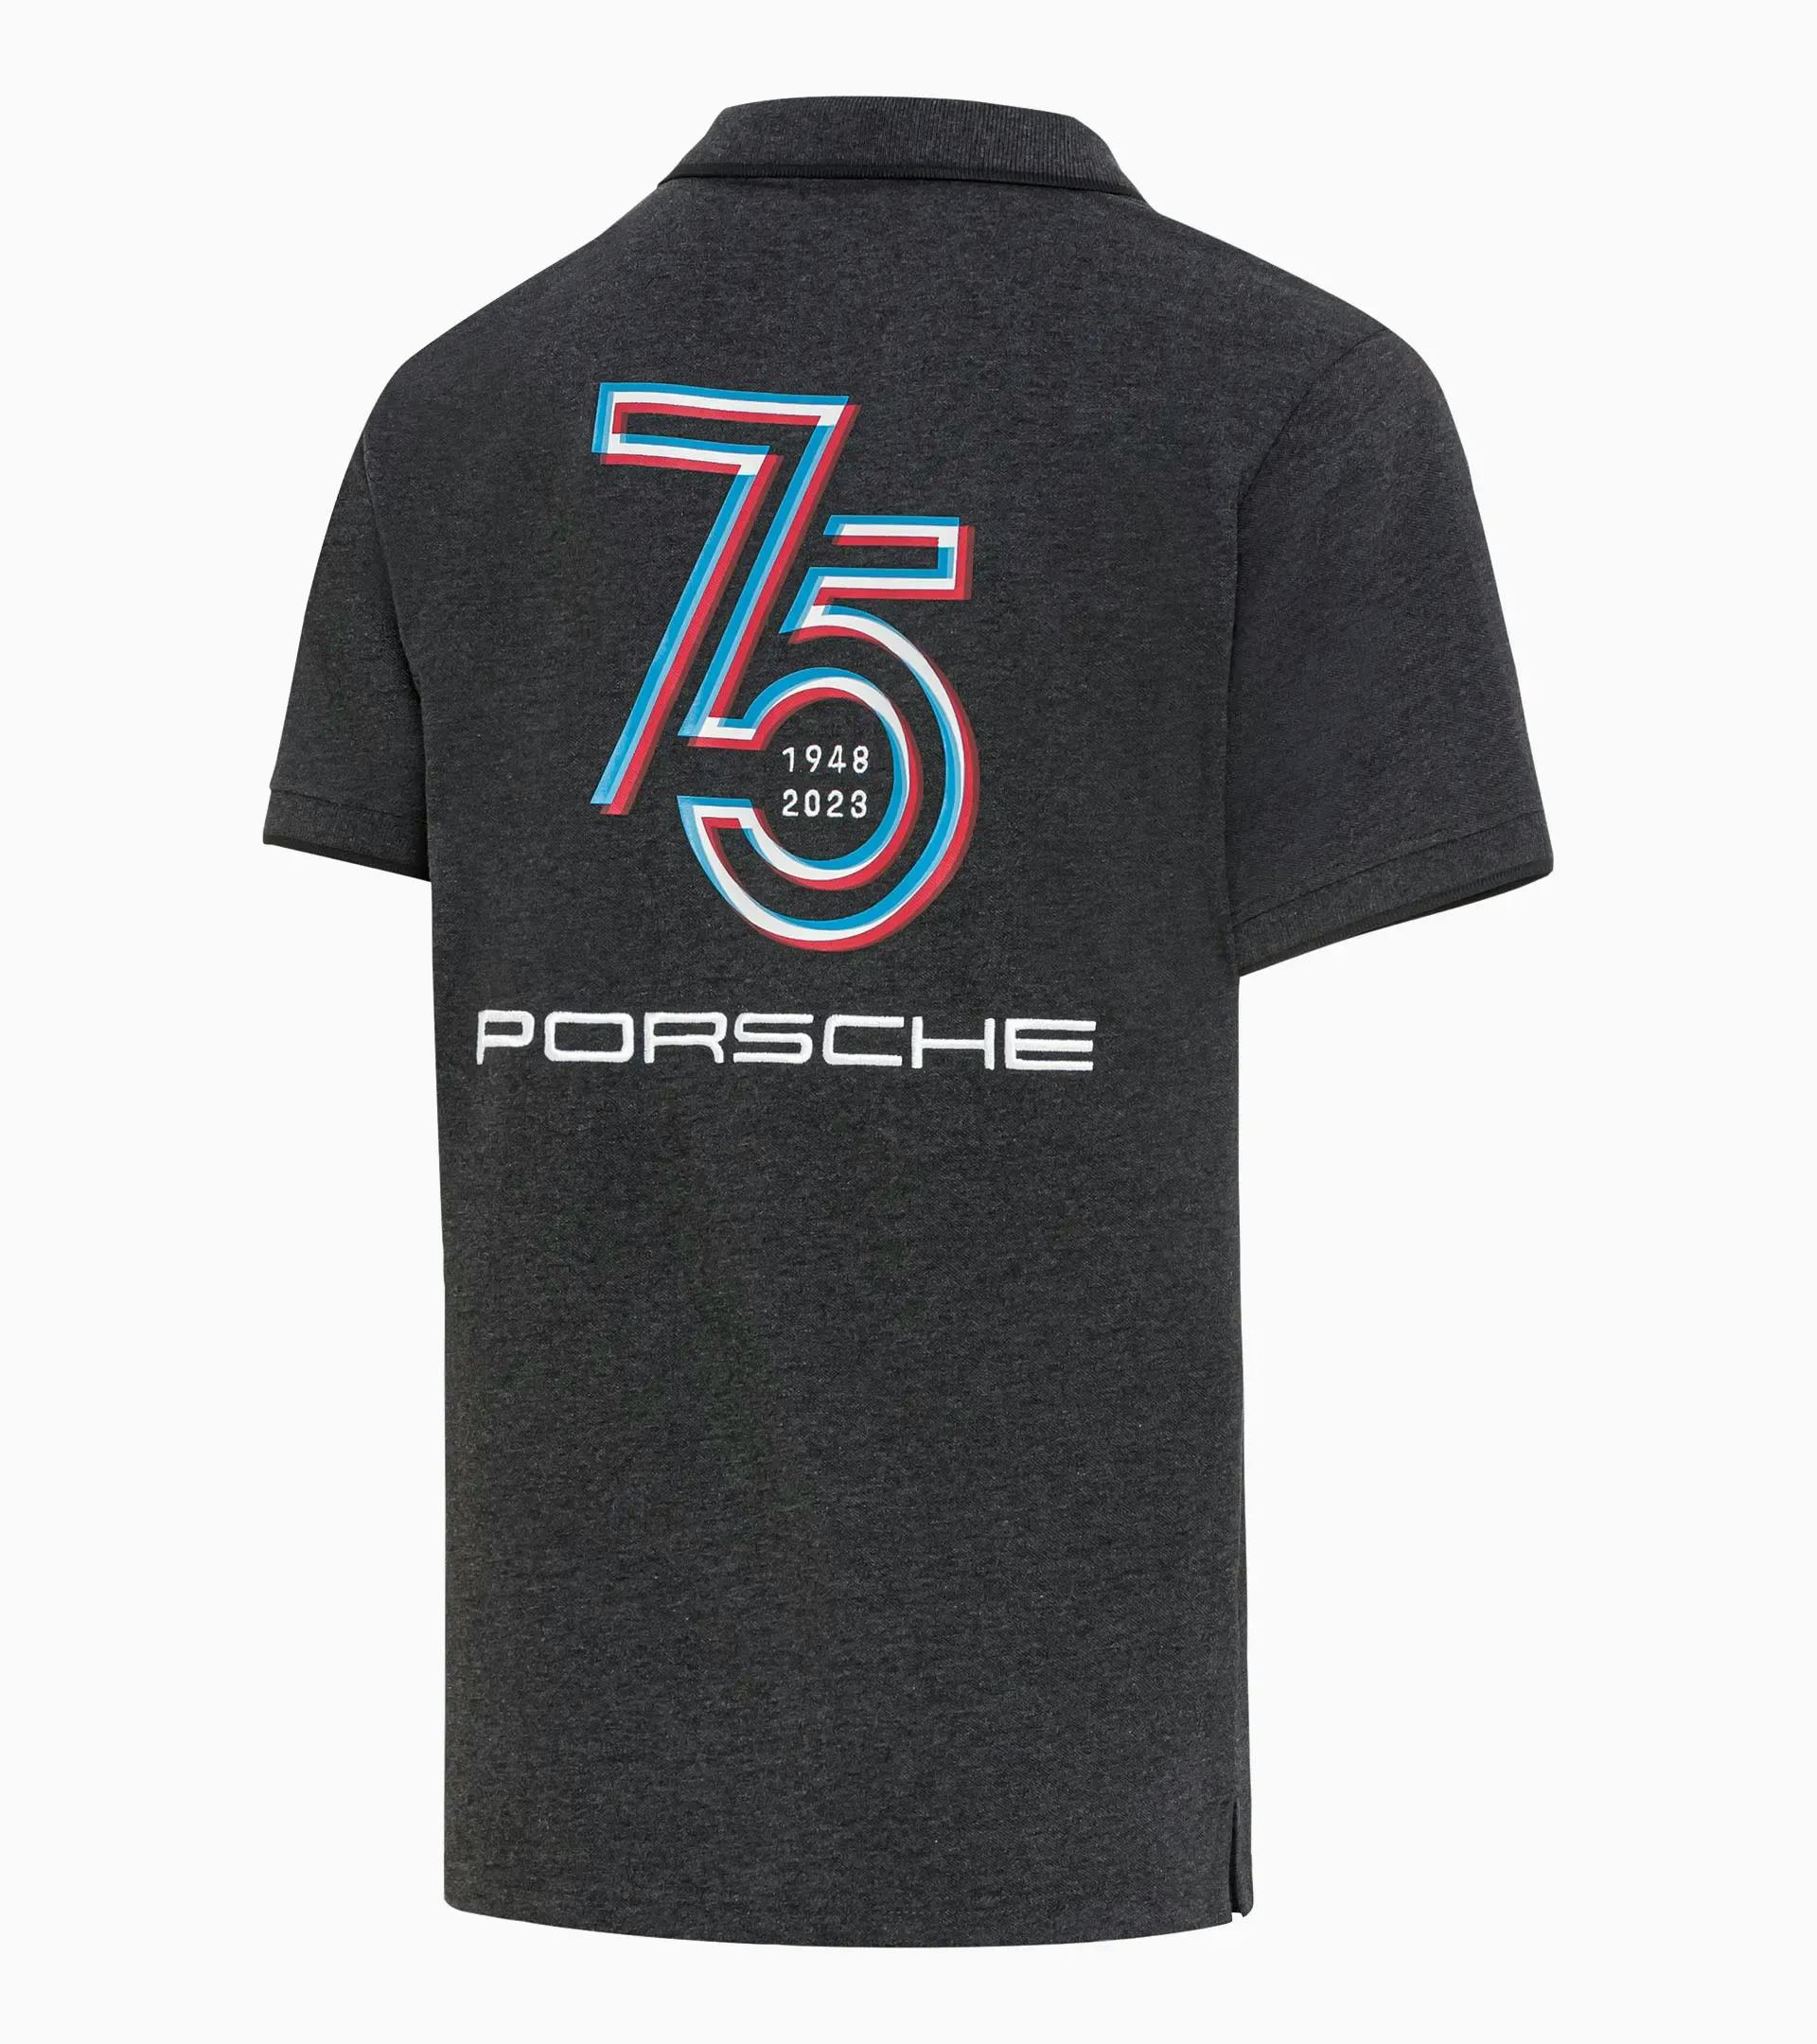 Polo shirt – 75Y 1